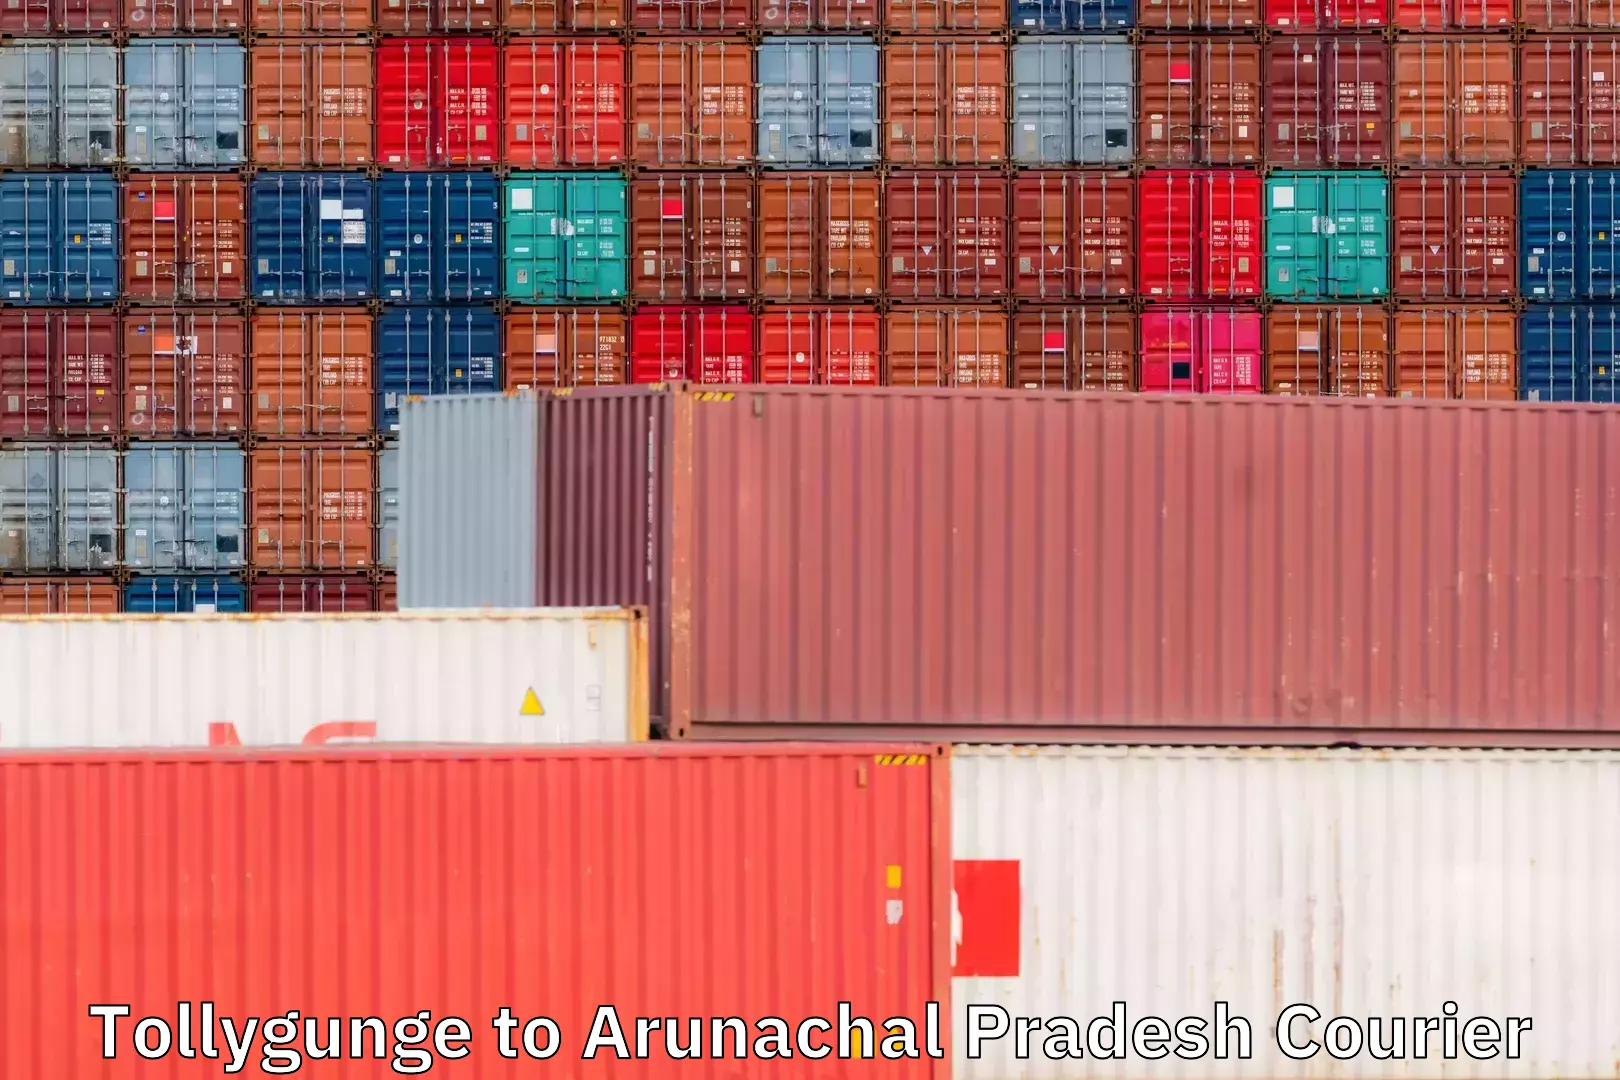 Advanced shipping network Tollygunge to Arunachal Pradesh